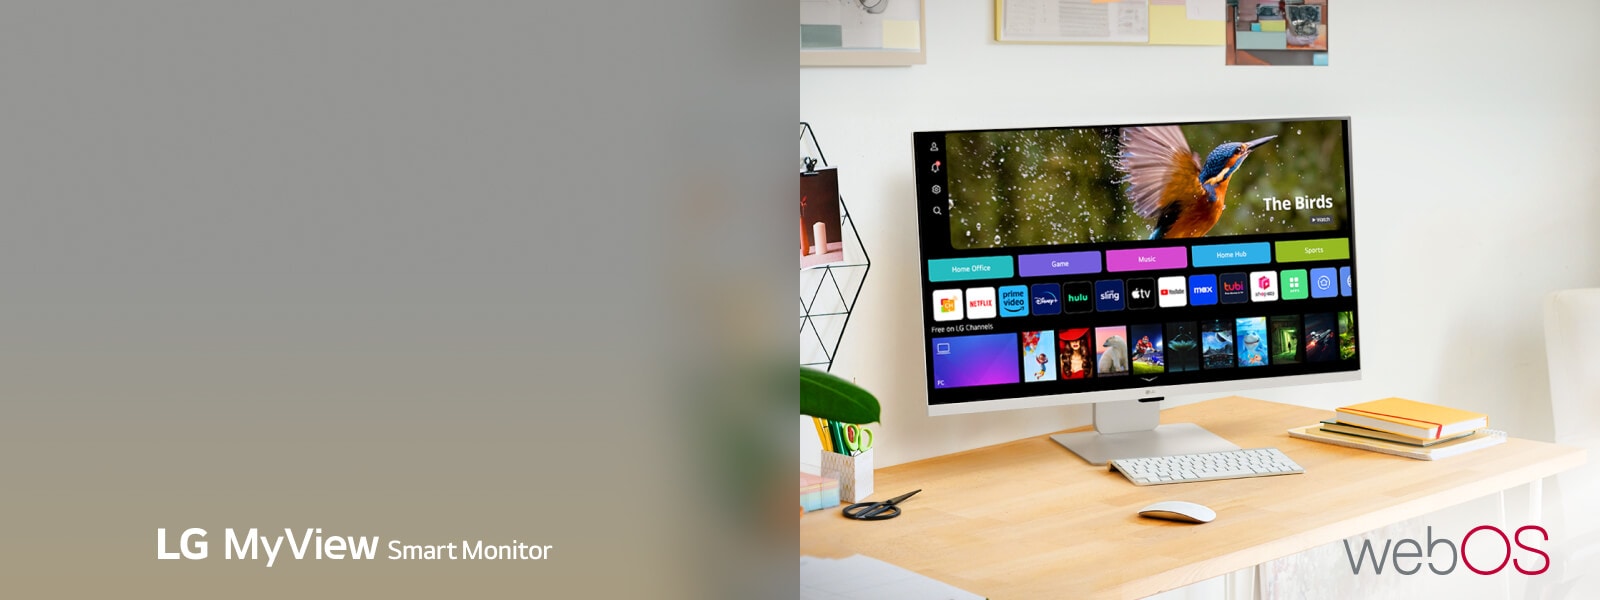 Get 20% off Smart monitors with promo code SMART20 image for desktop